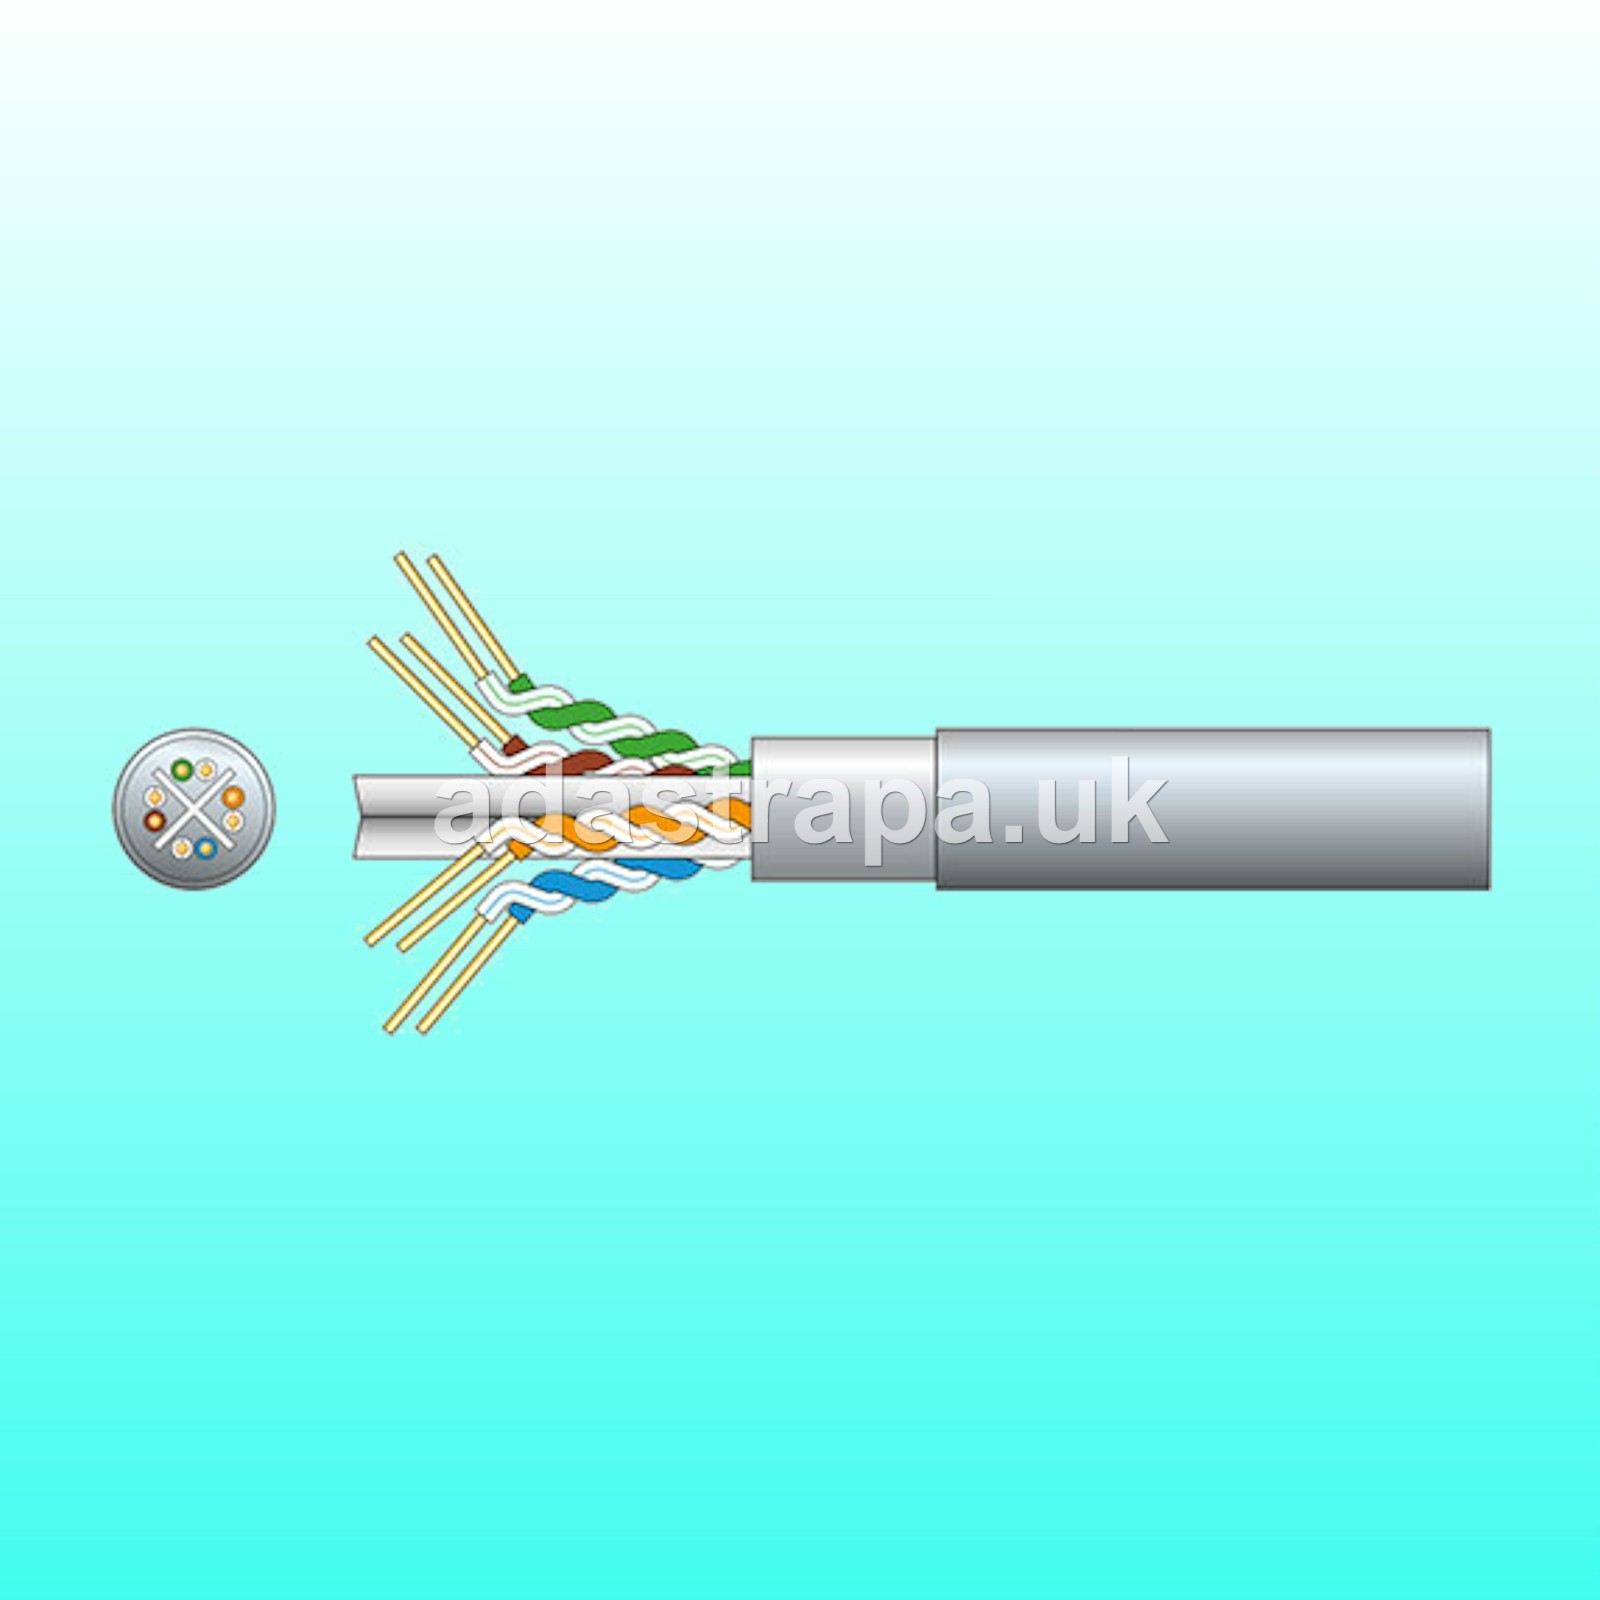 Mercury 808.013UK Cat6 Network Cable F/UTP 305M Grey - 808.013UK